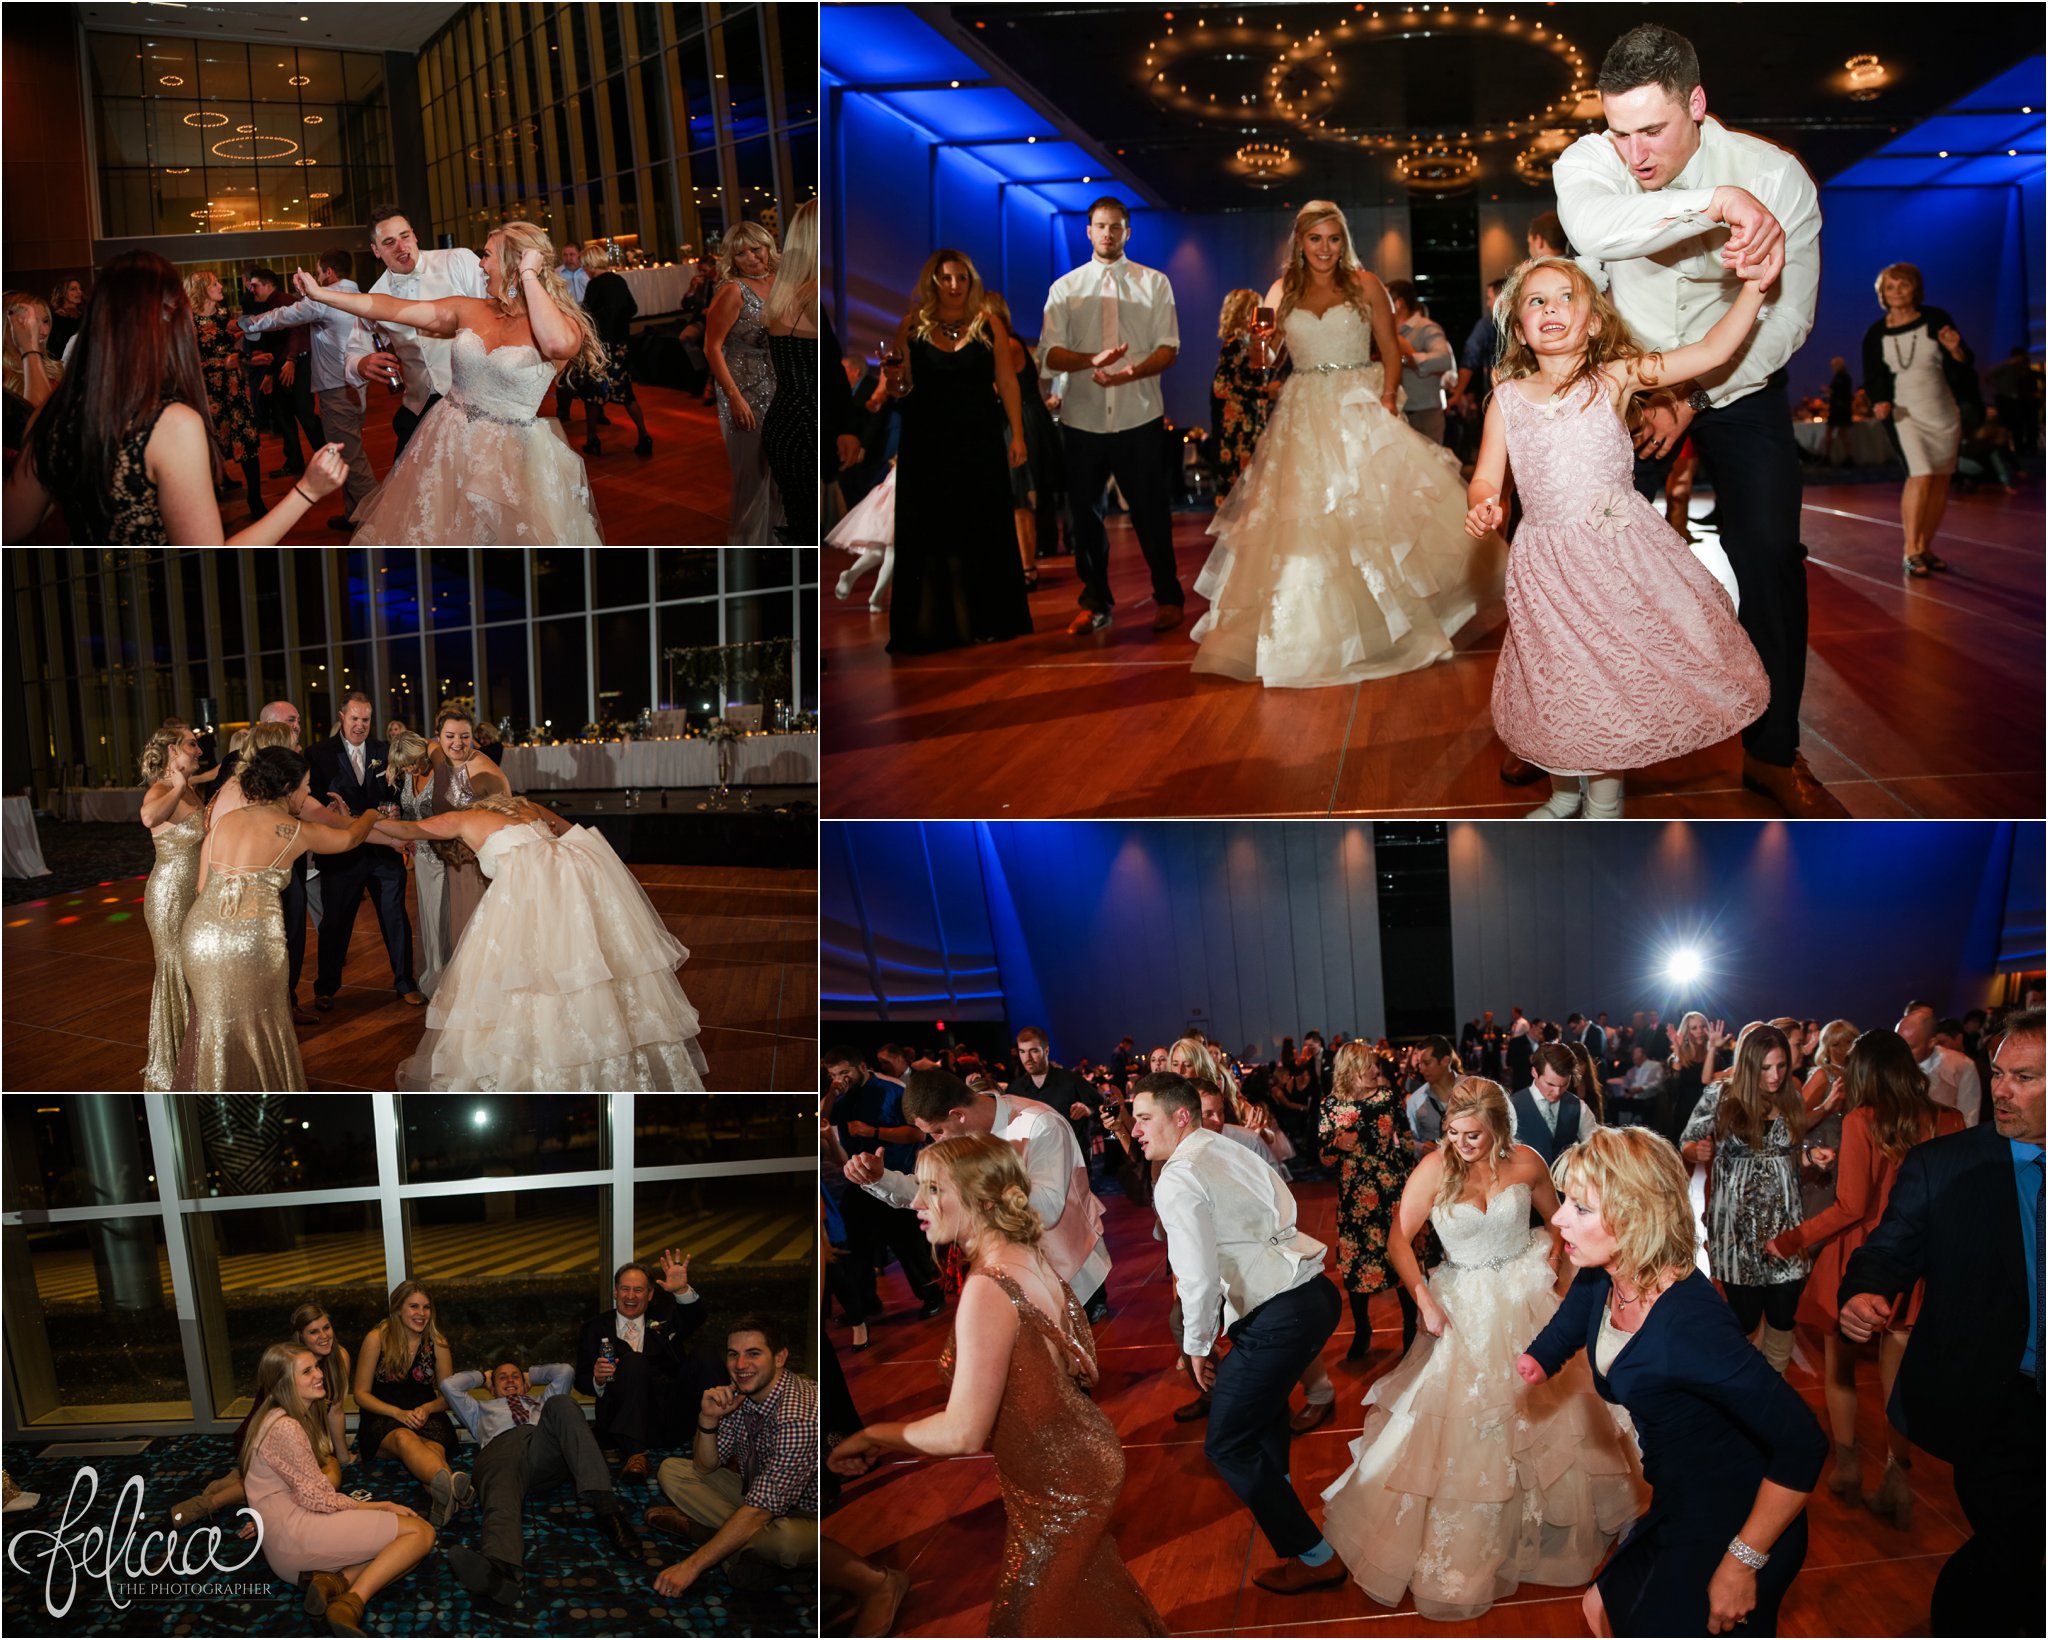 images by feliciathephotographer.com | wedding photographer | downtown kansas city | reception | the grand ballroom kc convention center | dance floor | party | celebration | flower girl | laughter | 